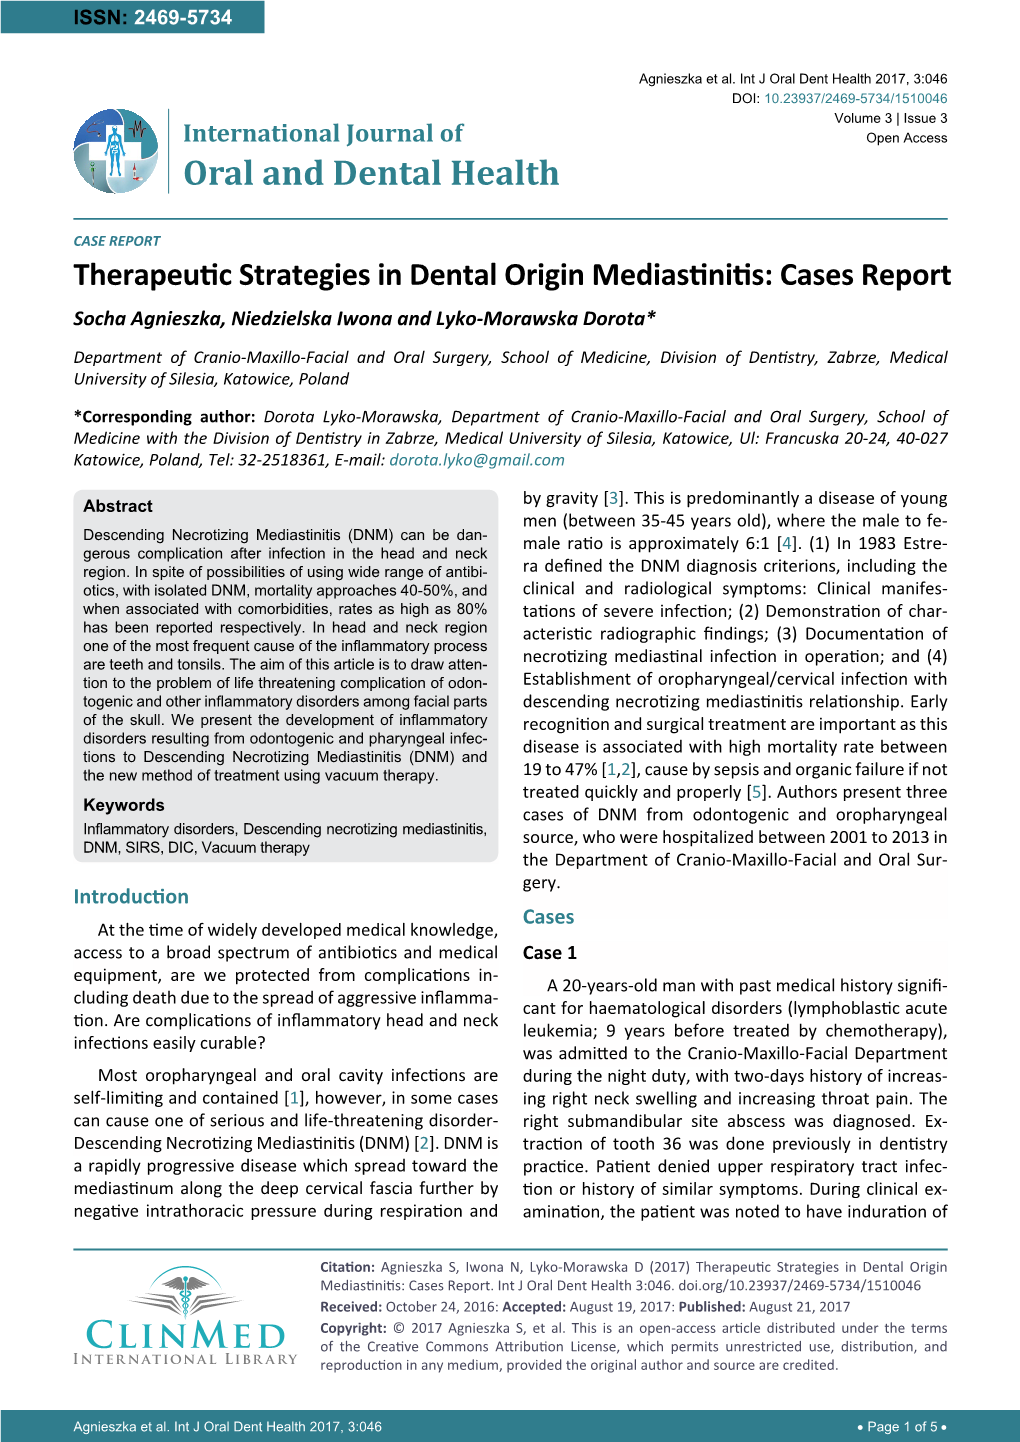 Therapeutic Strategies in Dental Origin Mediastinitis: Cases Report Socha Agnieszka, Niedzielska Iwona and Lyko-Morawska Dorota*